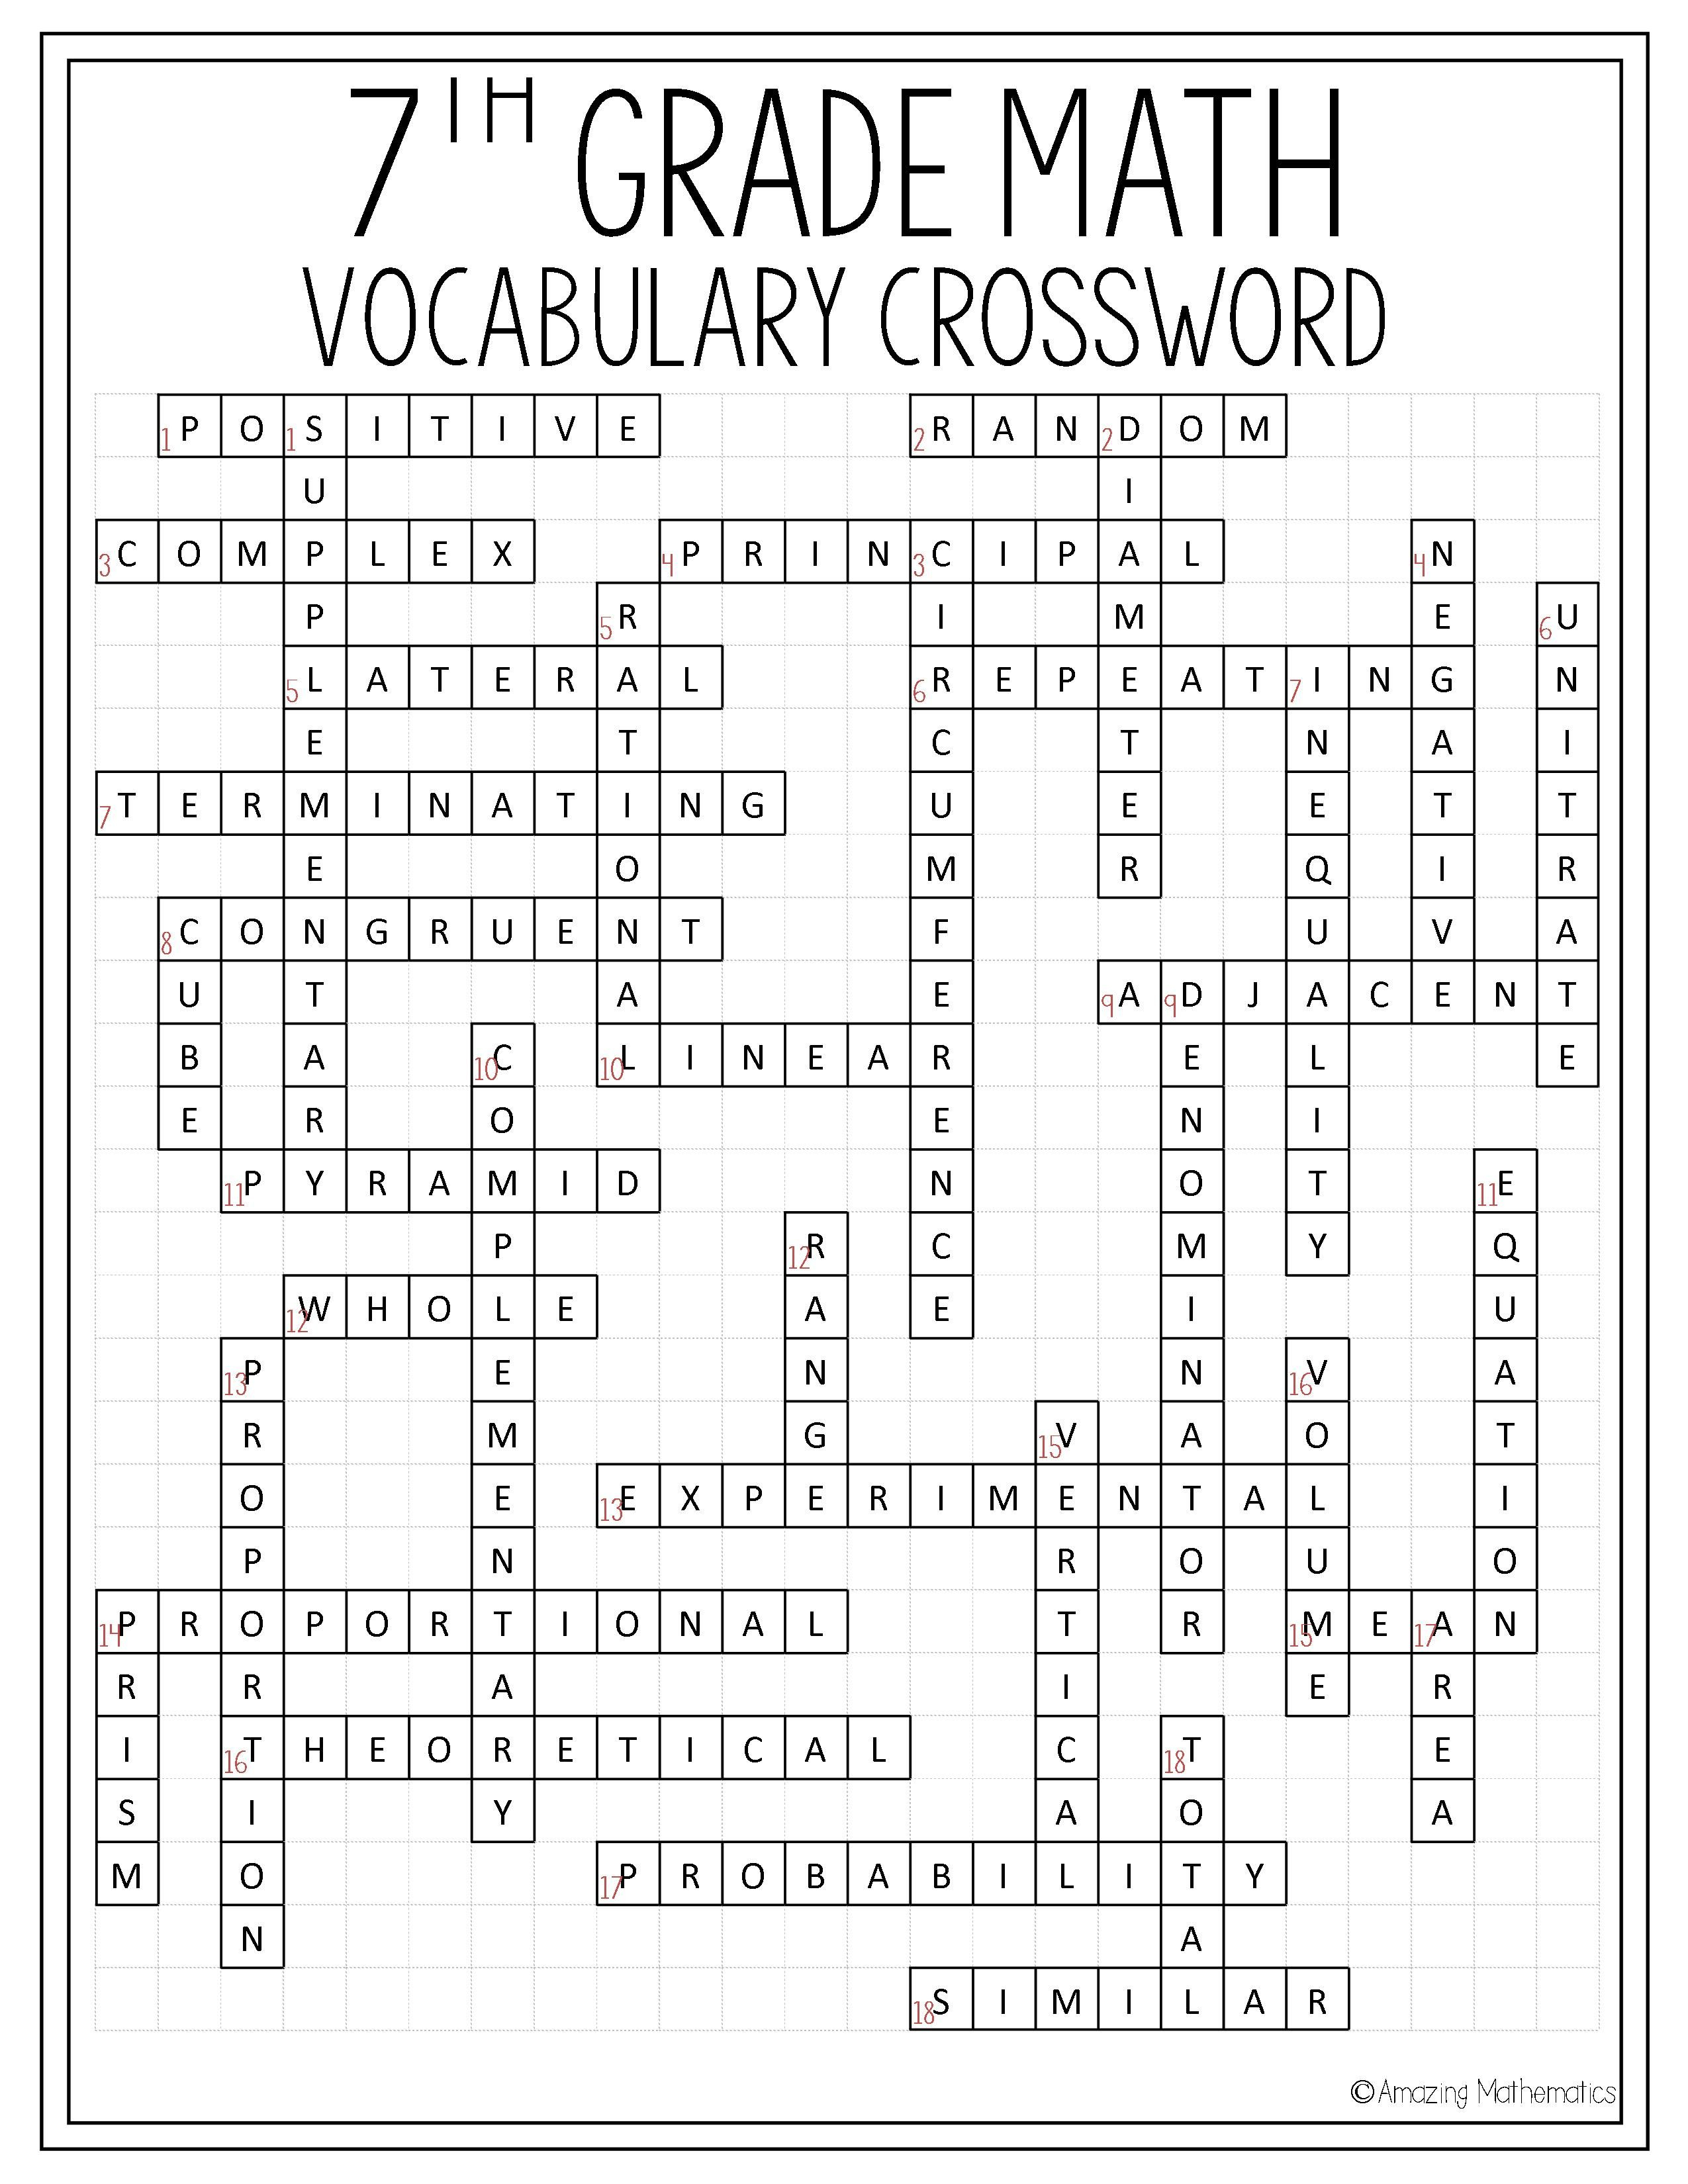 Crossword Puzzles Printable 7Th Grade | Printable ...